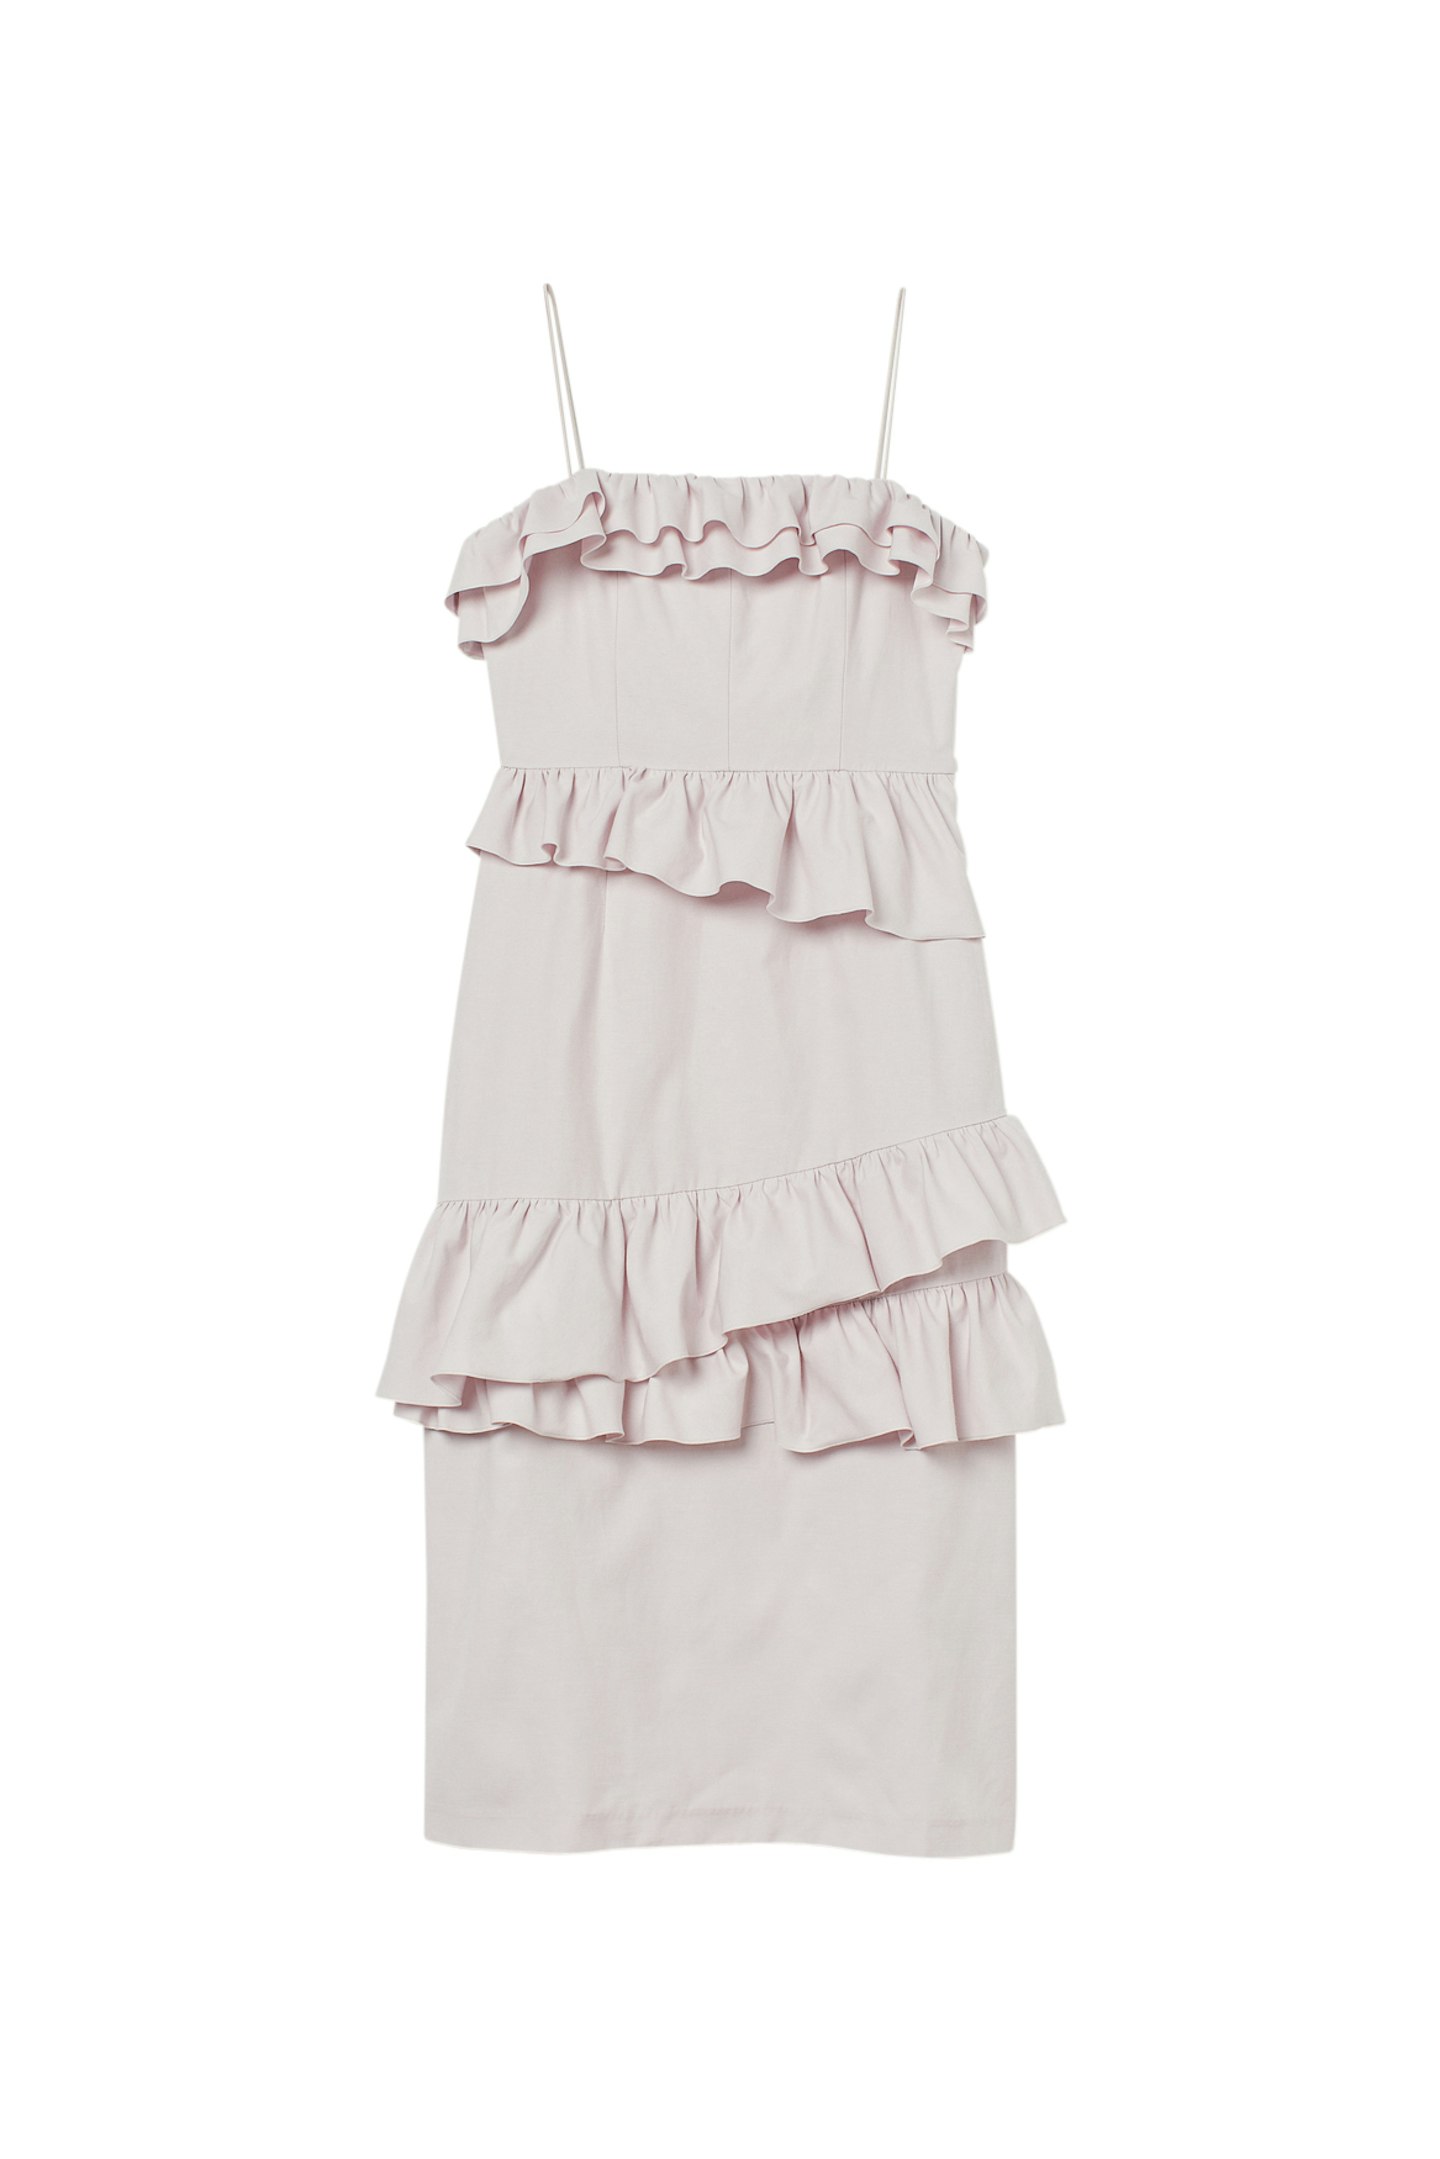 Ruffle Detail Dress, £39.99